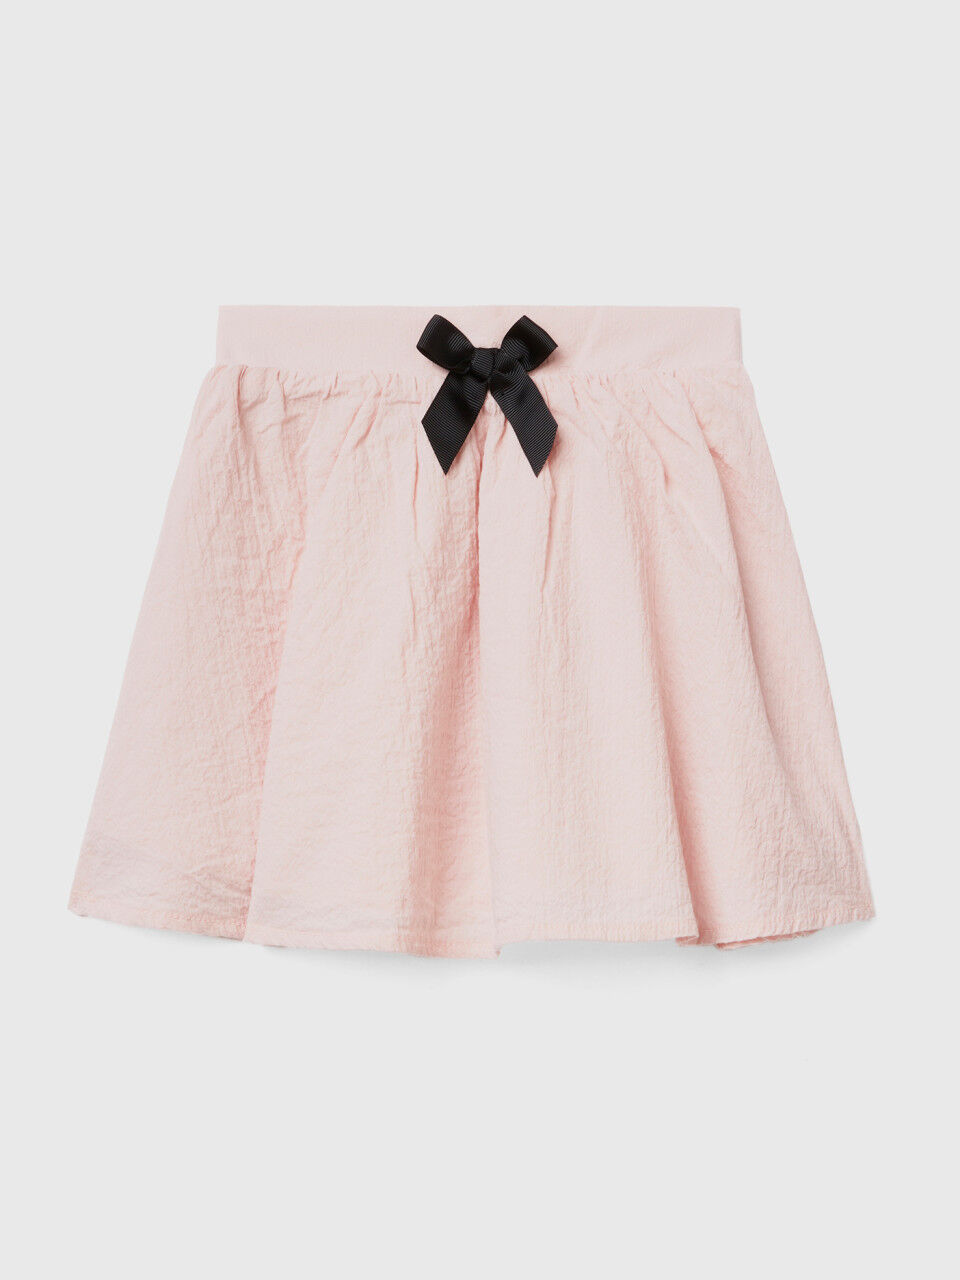 Miniskirt with bow